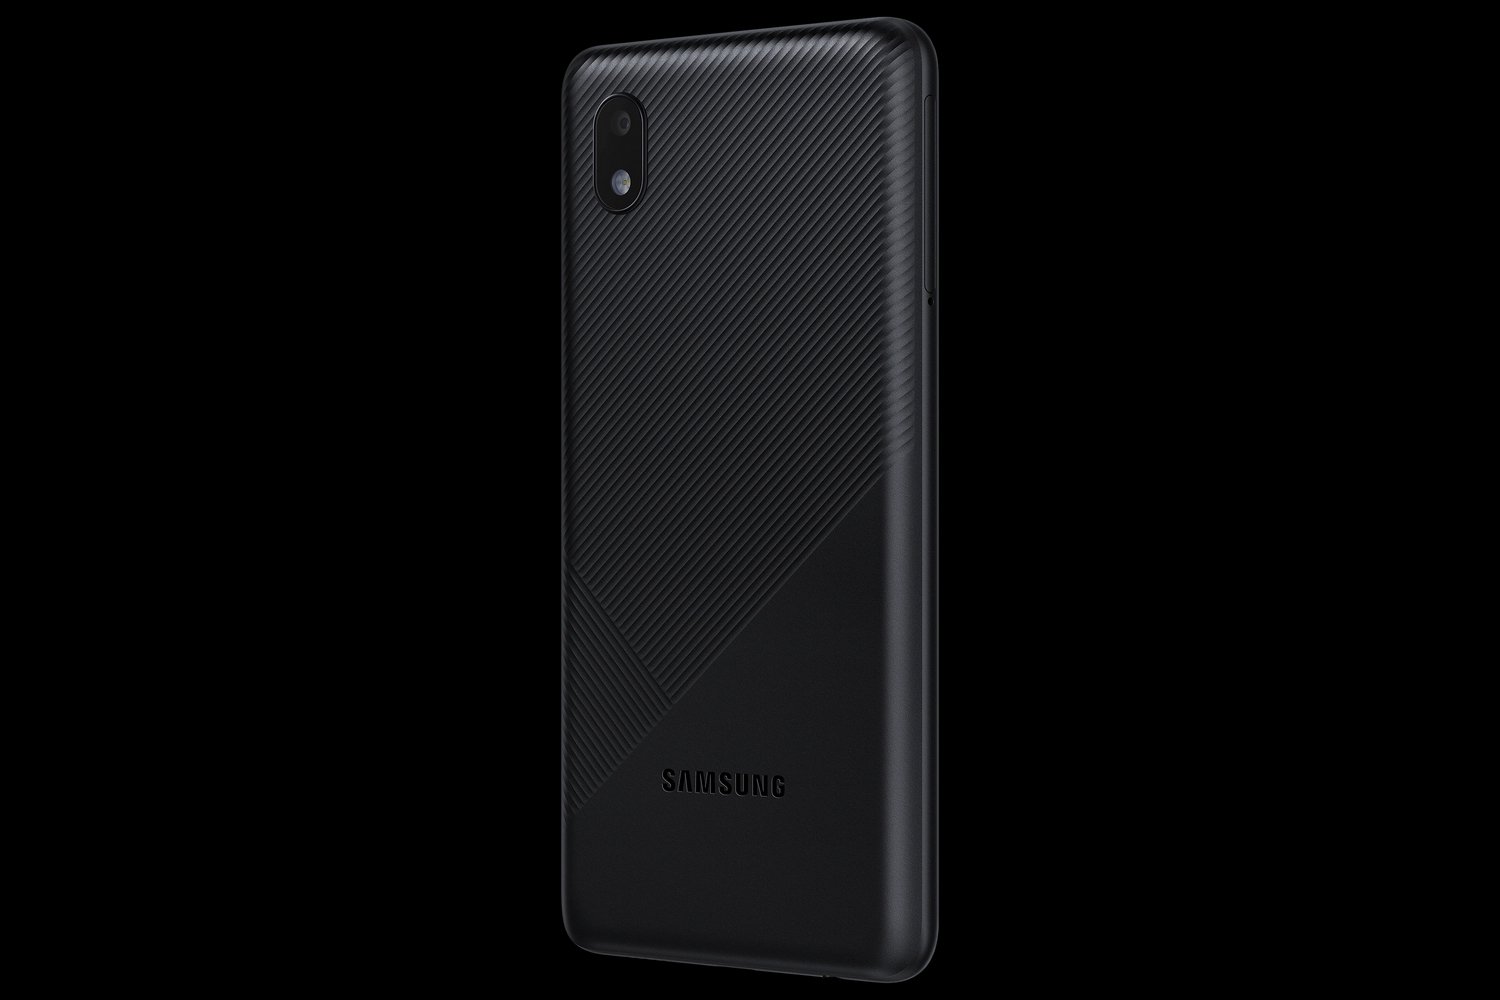 Samsung Galaxy Active 2 Review